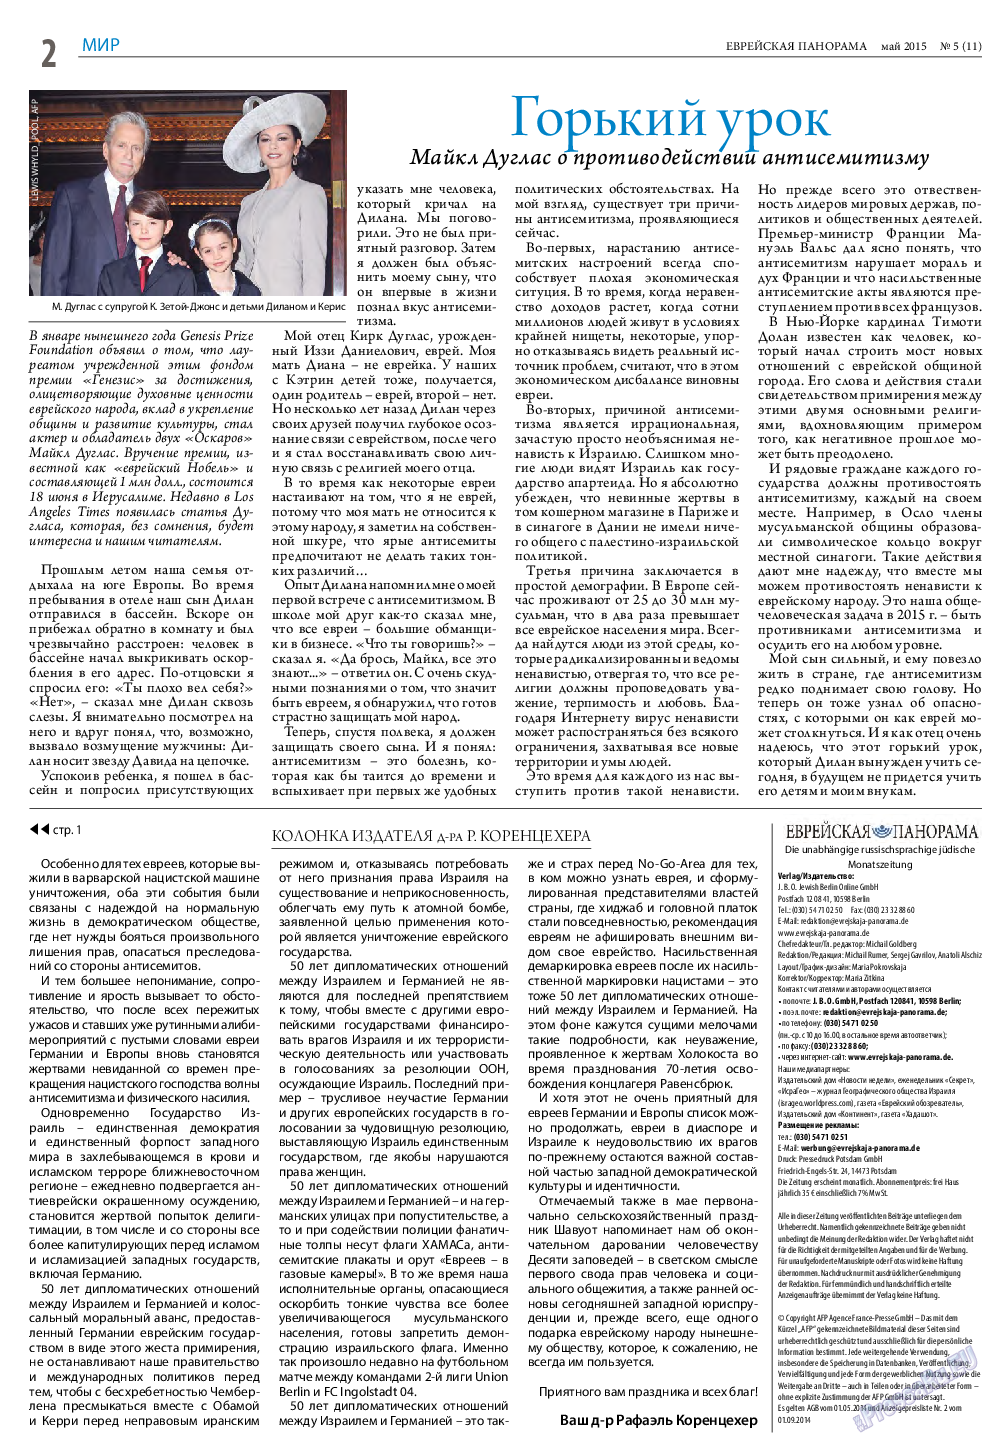 Еврейская панорама, газета. 2015 №5 стр.2